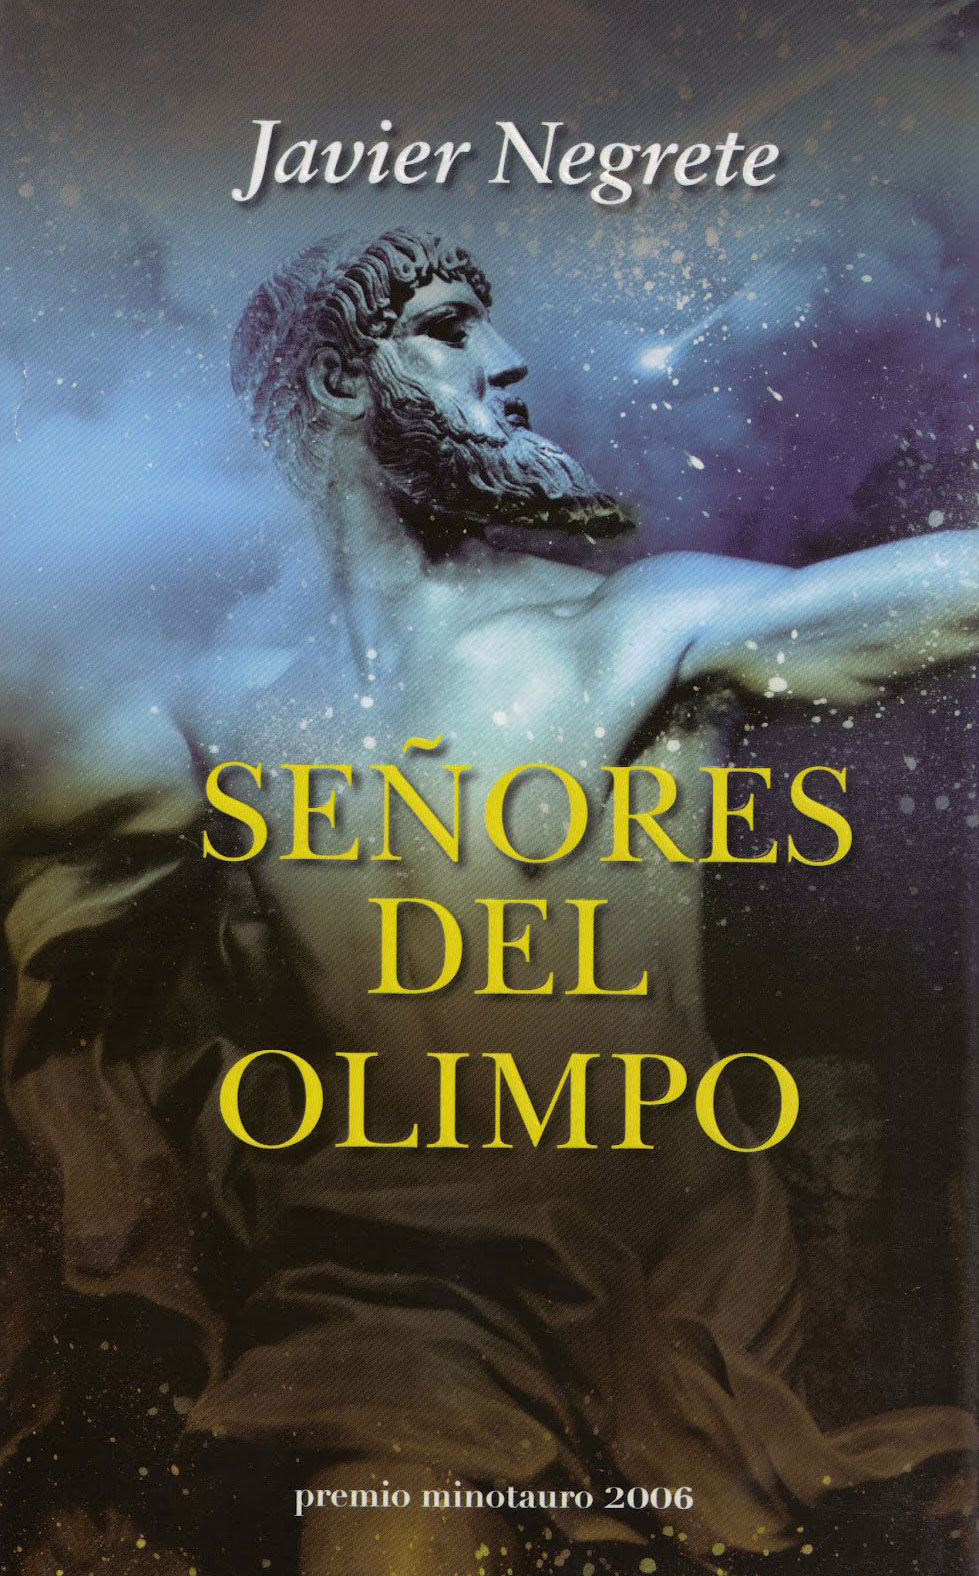 Portada de la novela Señores del Olimpo, de Javier Negrete